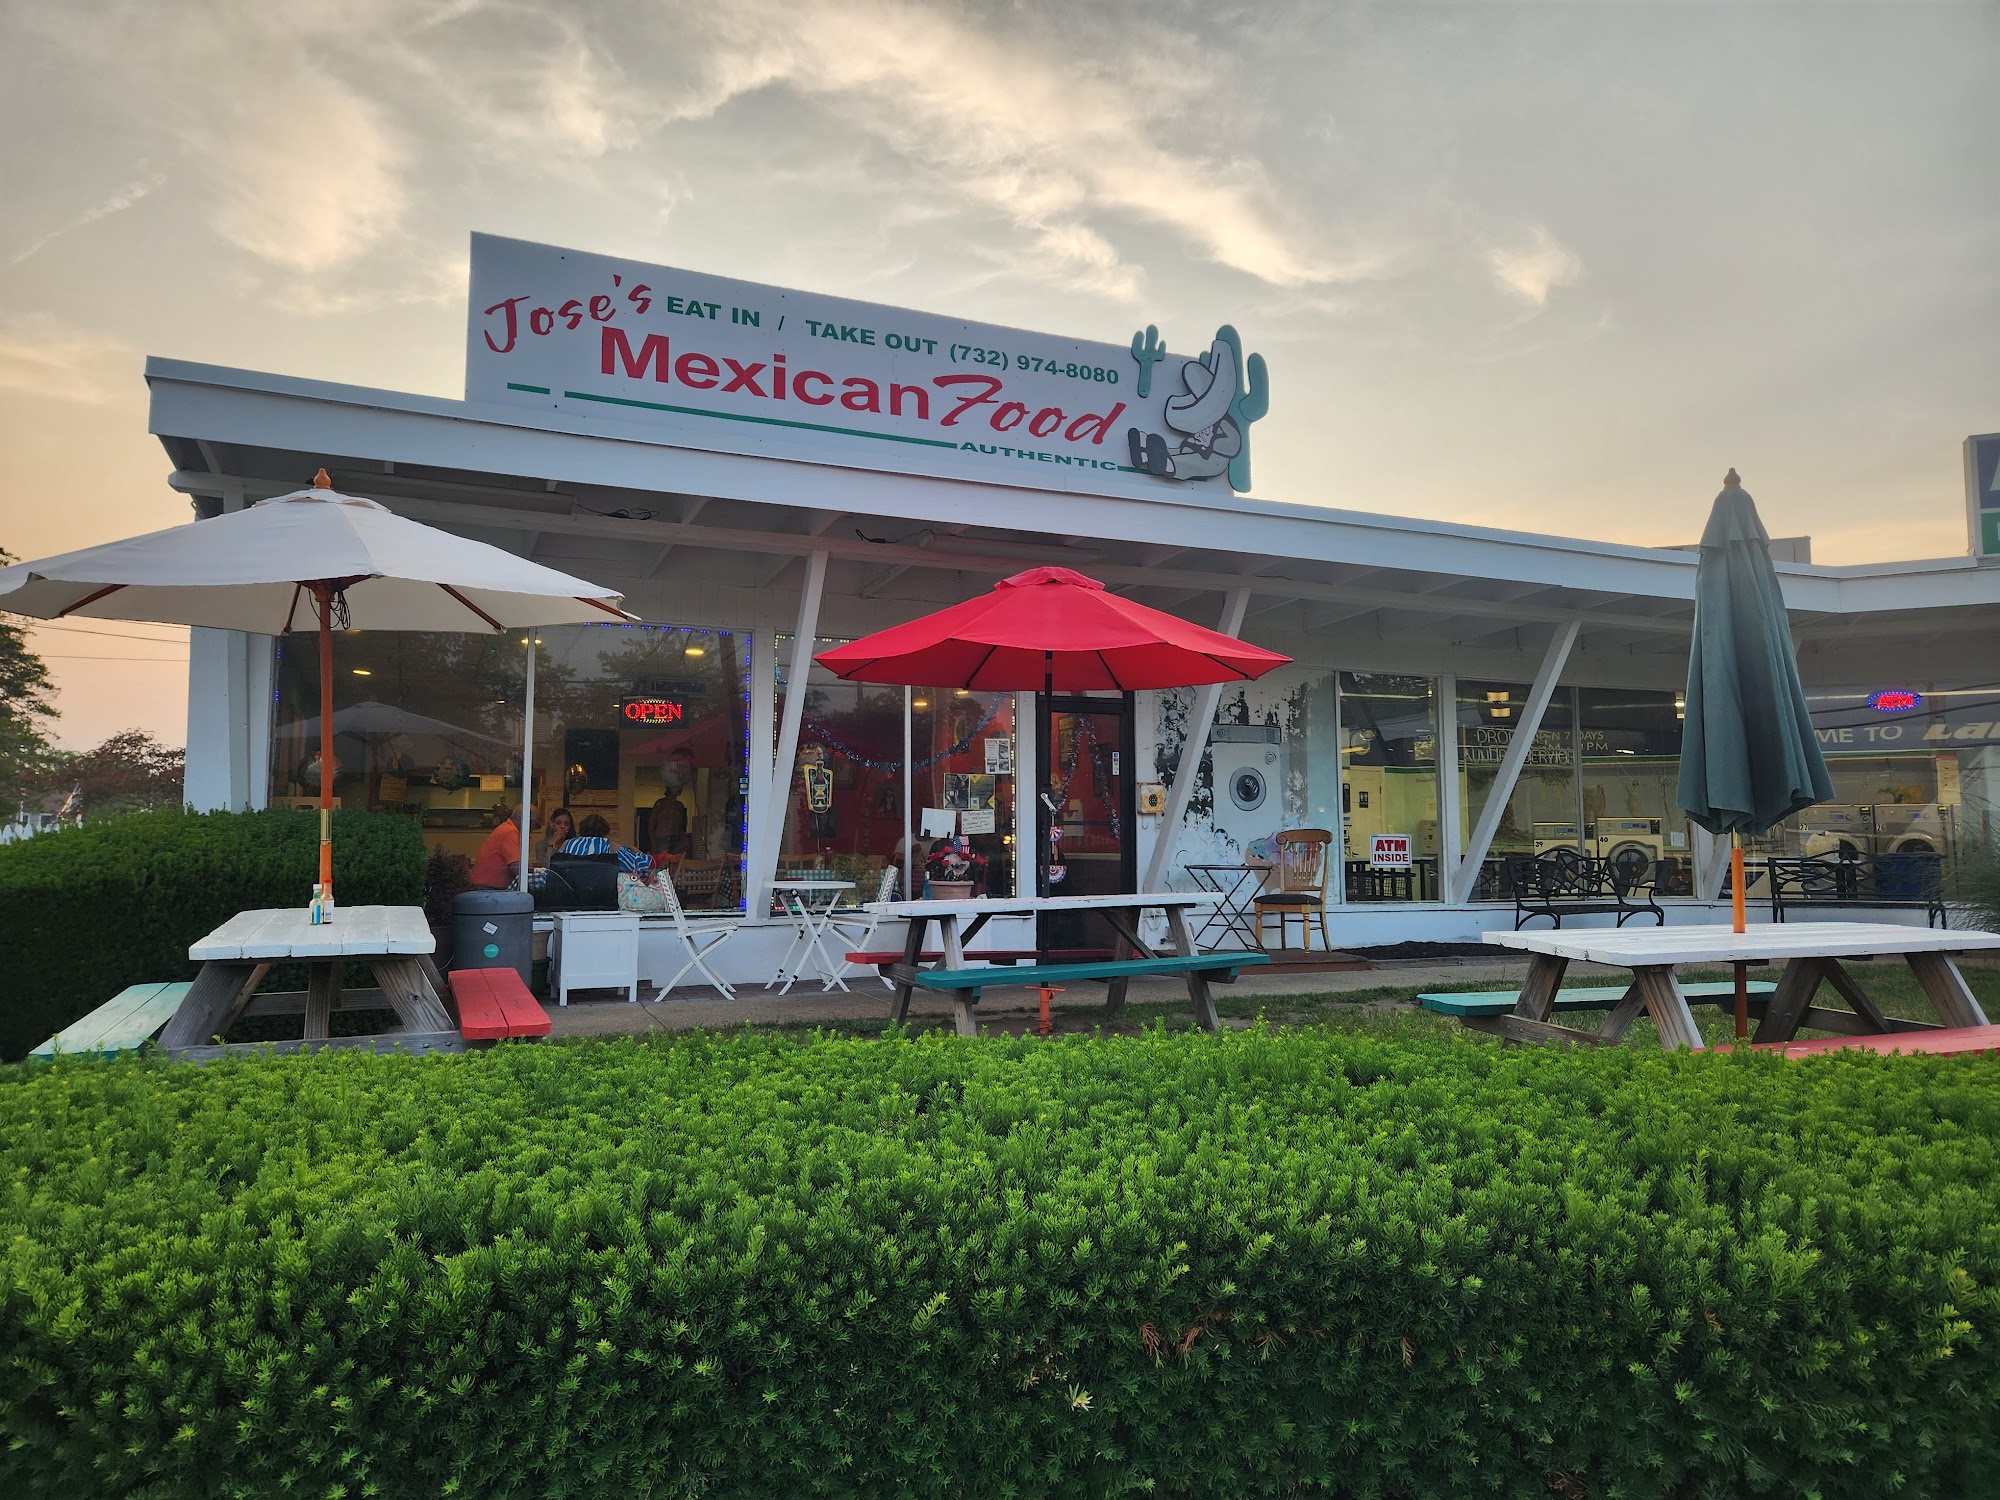 Jose's Mexican Restaurant